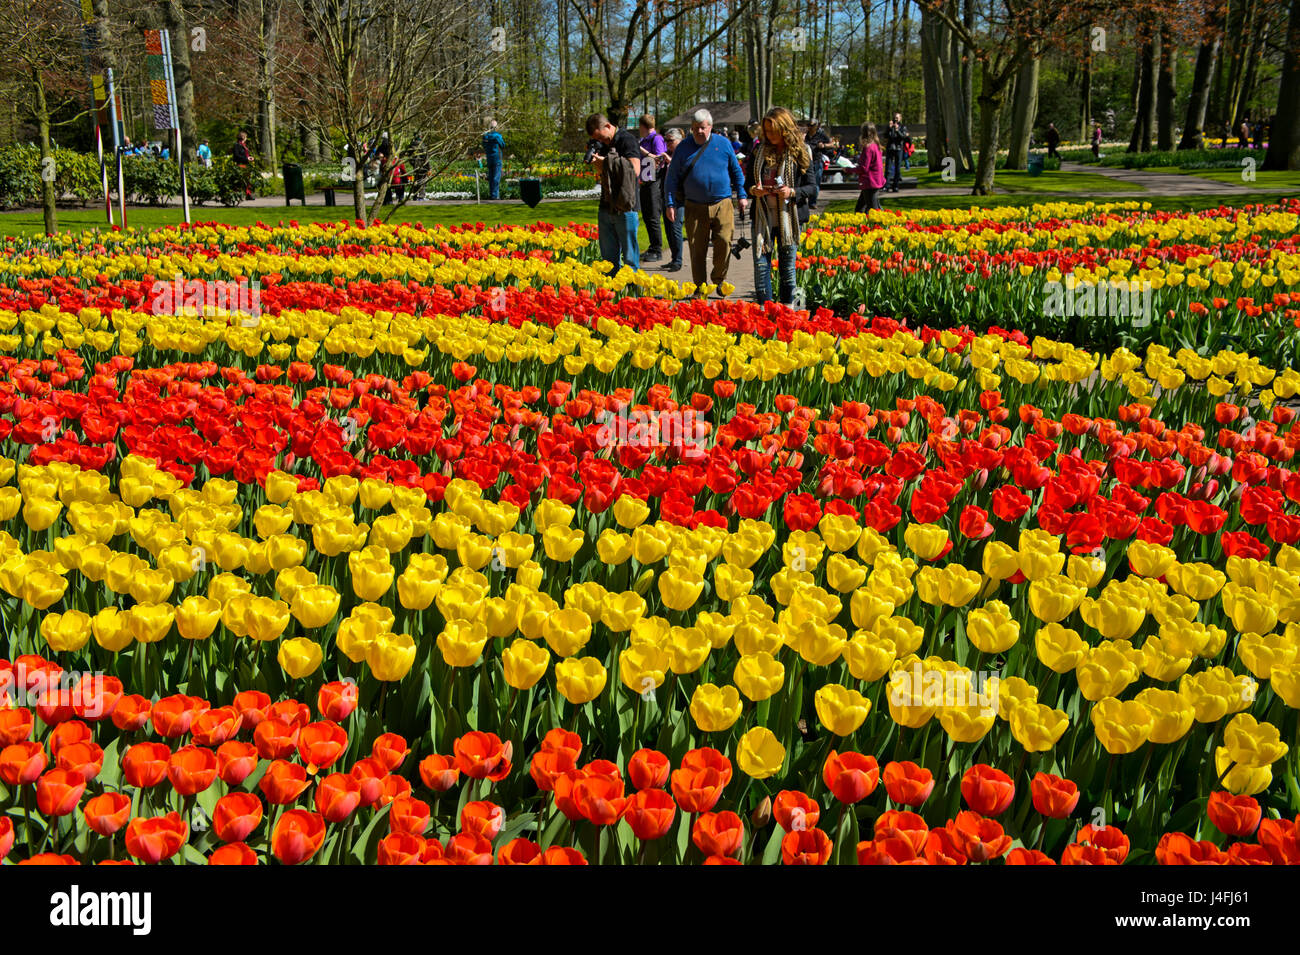 Flower beds with Dutch tulips, Keukenhof Flower Gardens, Lisse, Netherlands Stock Photo